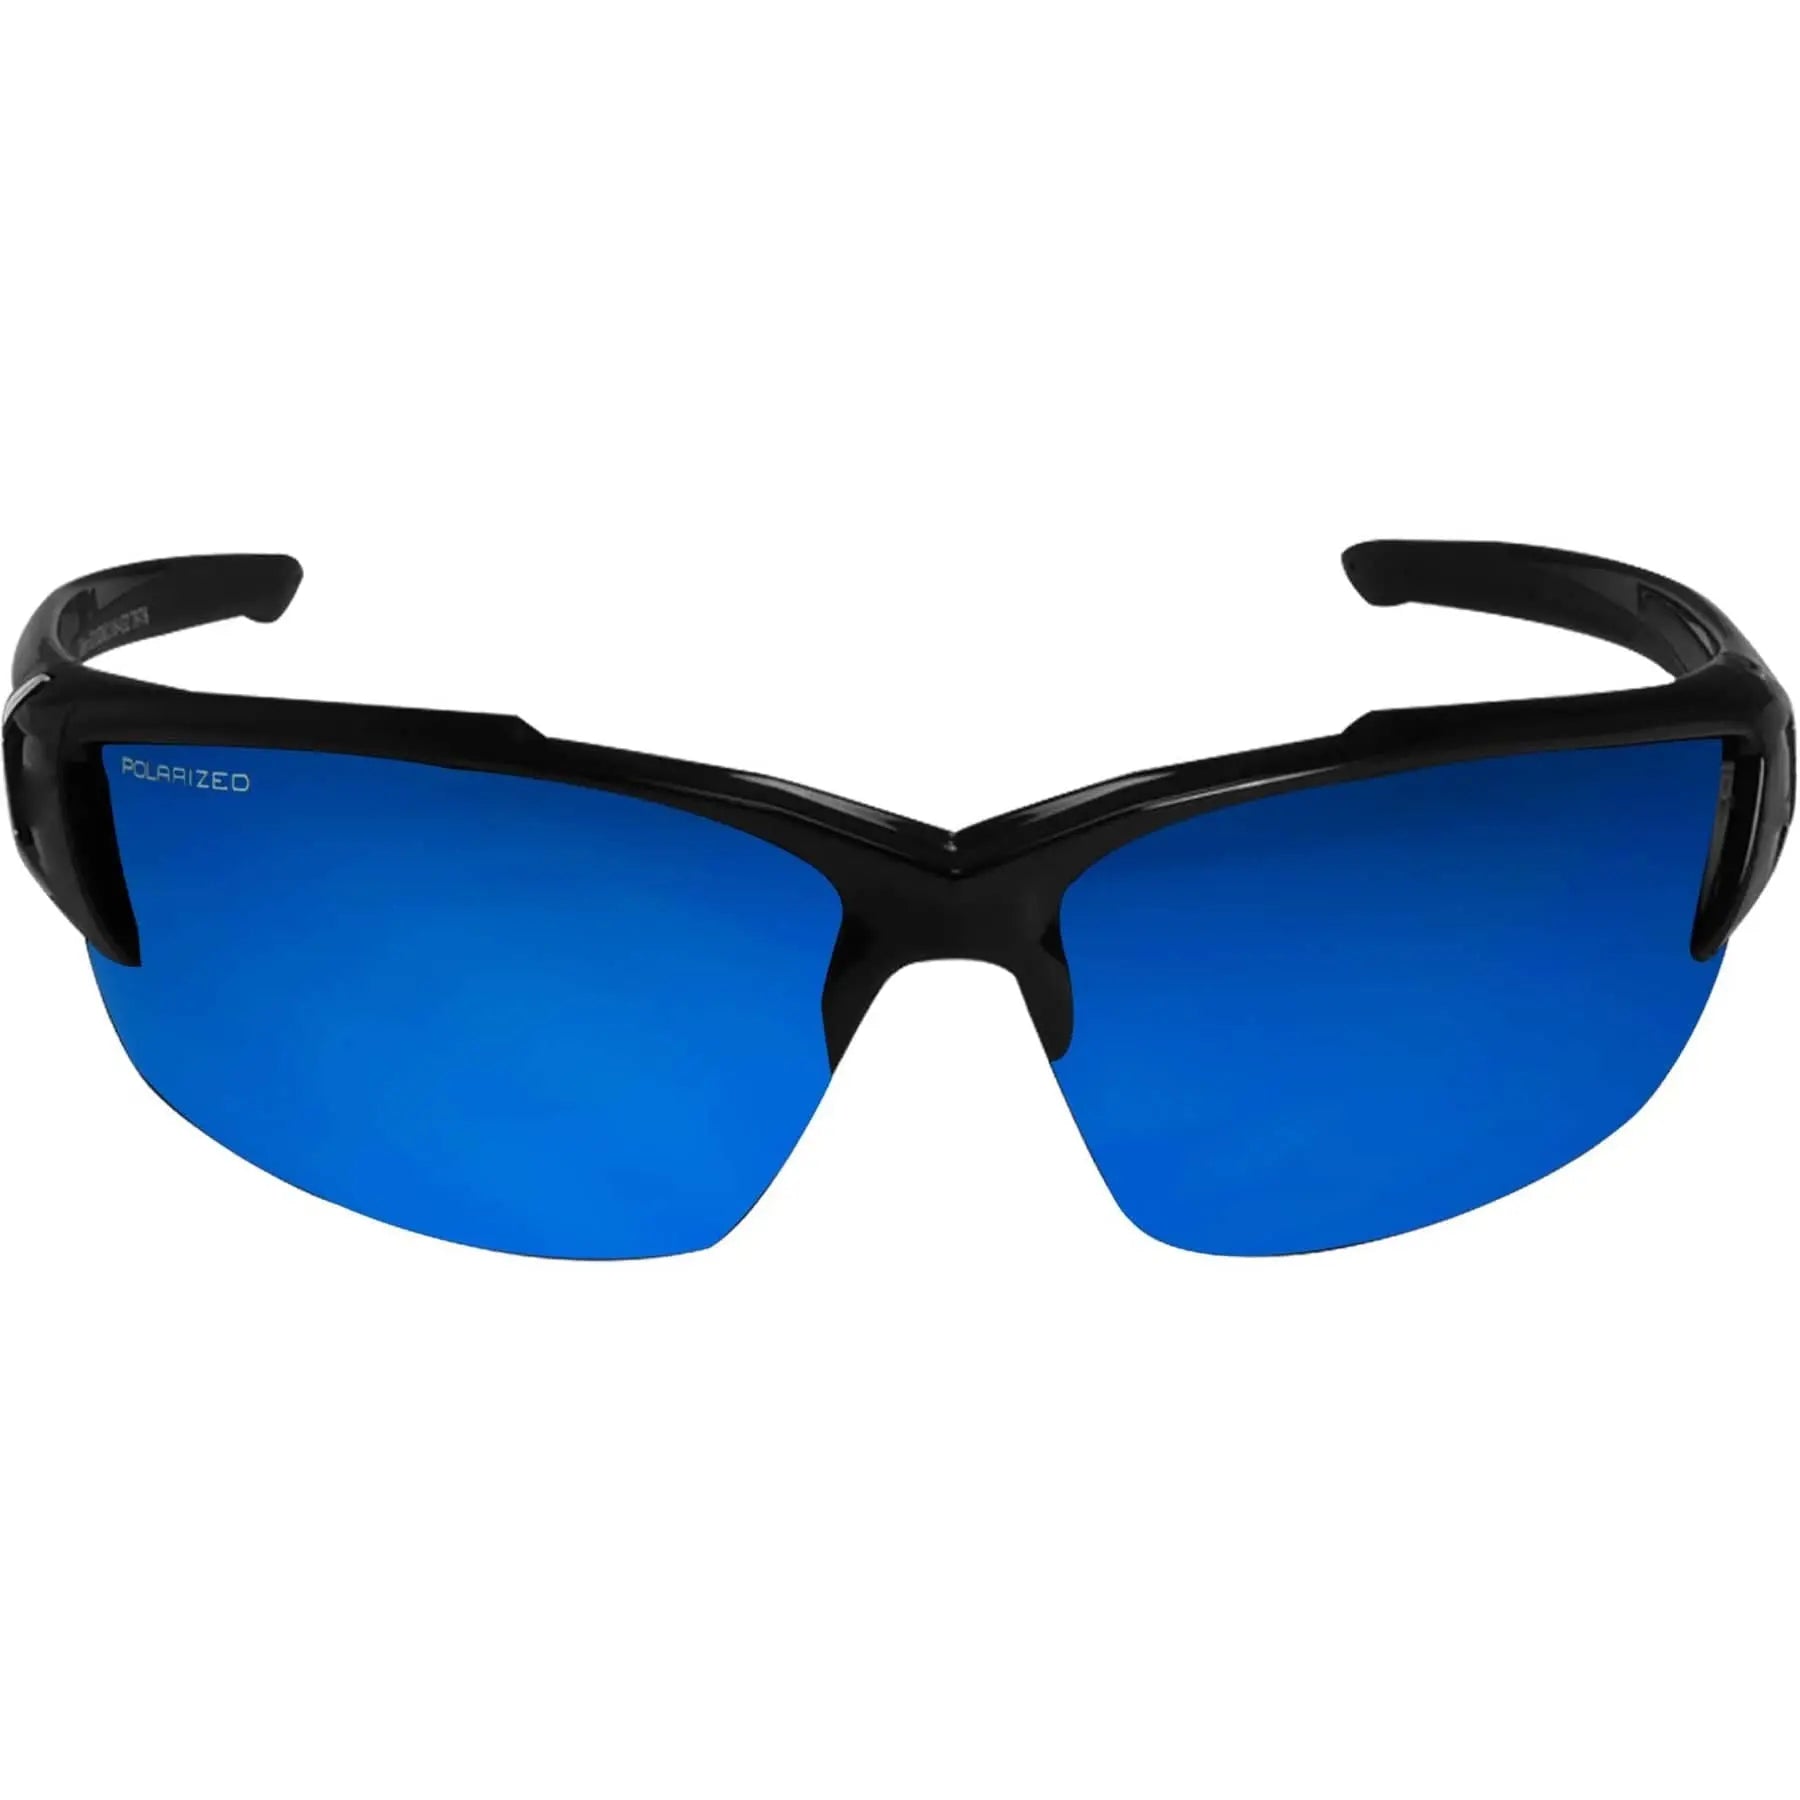 Edge Eyewear TSDKAP218-G2 Khor Safety Glasses, Black